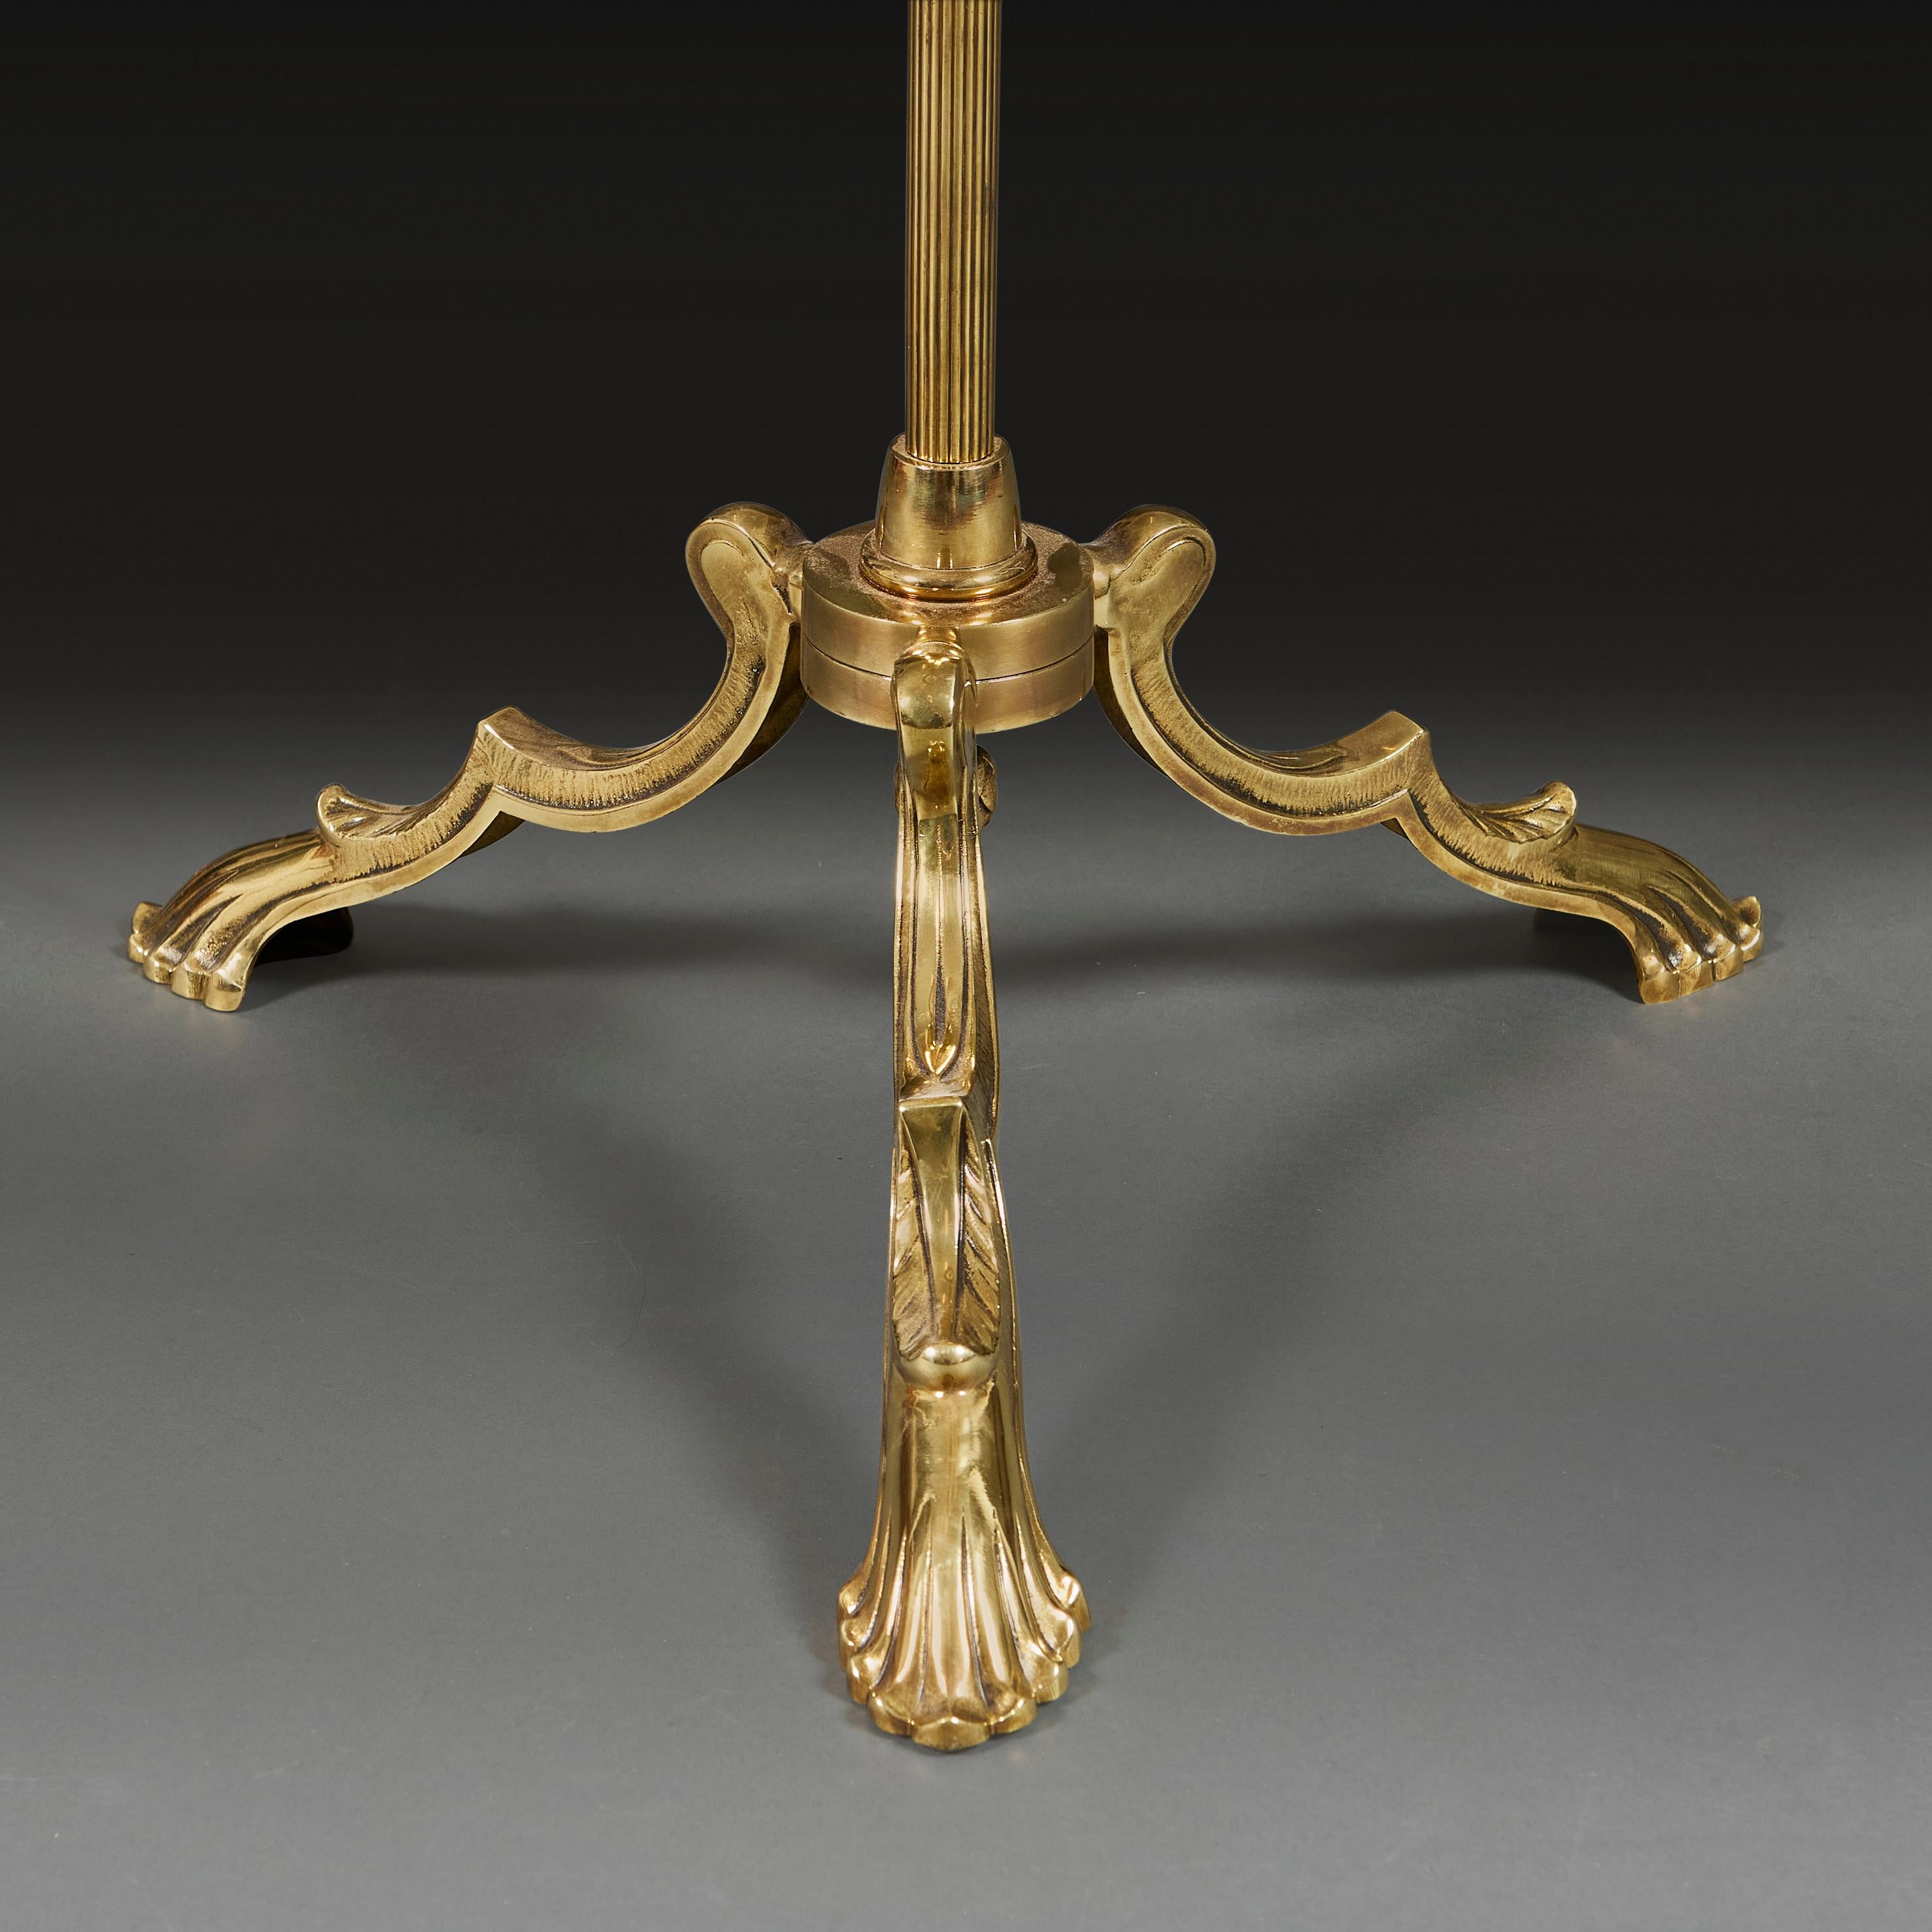 English An early 20th century Edwardian brass standard lamp